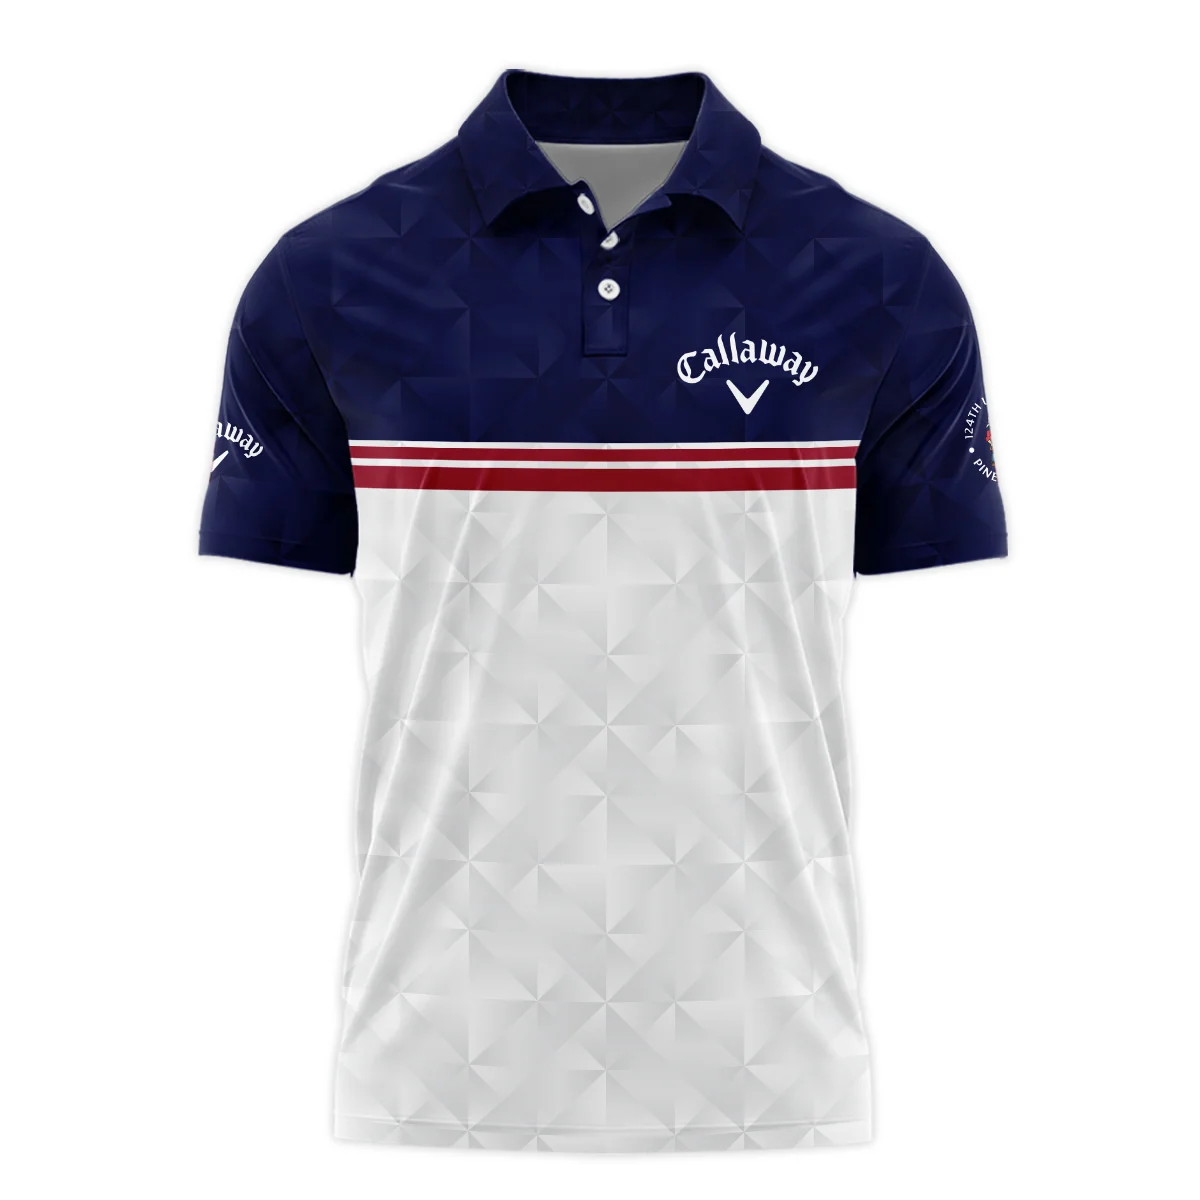 Golf Sport 124th U.S. Open Pinehurst Callaway Zipper Polo Shirt Dark Blue White Abstract Geometric Triangles All Over Print Zipper Polo Shirt For Men